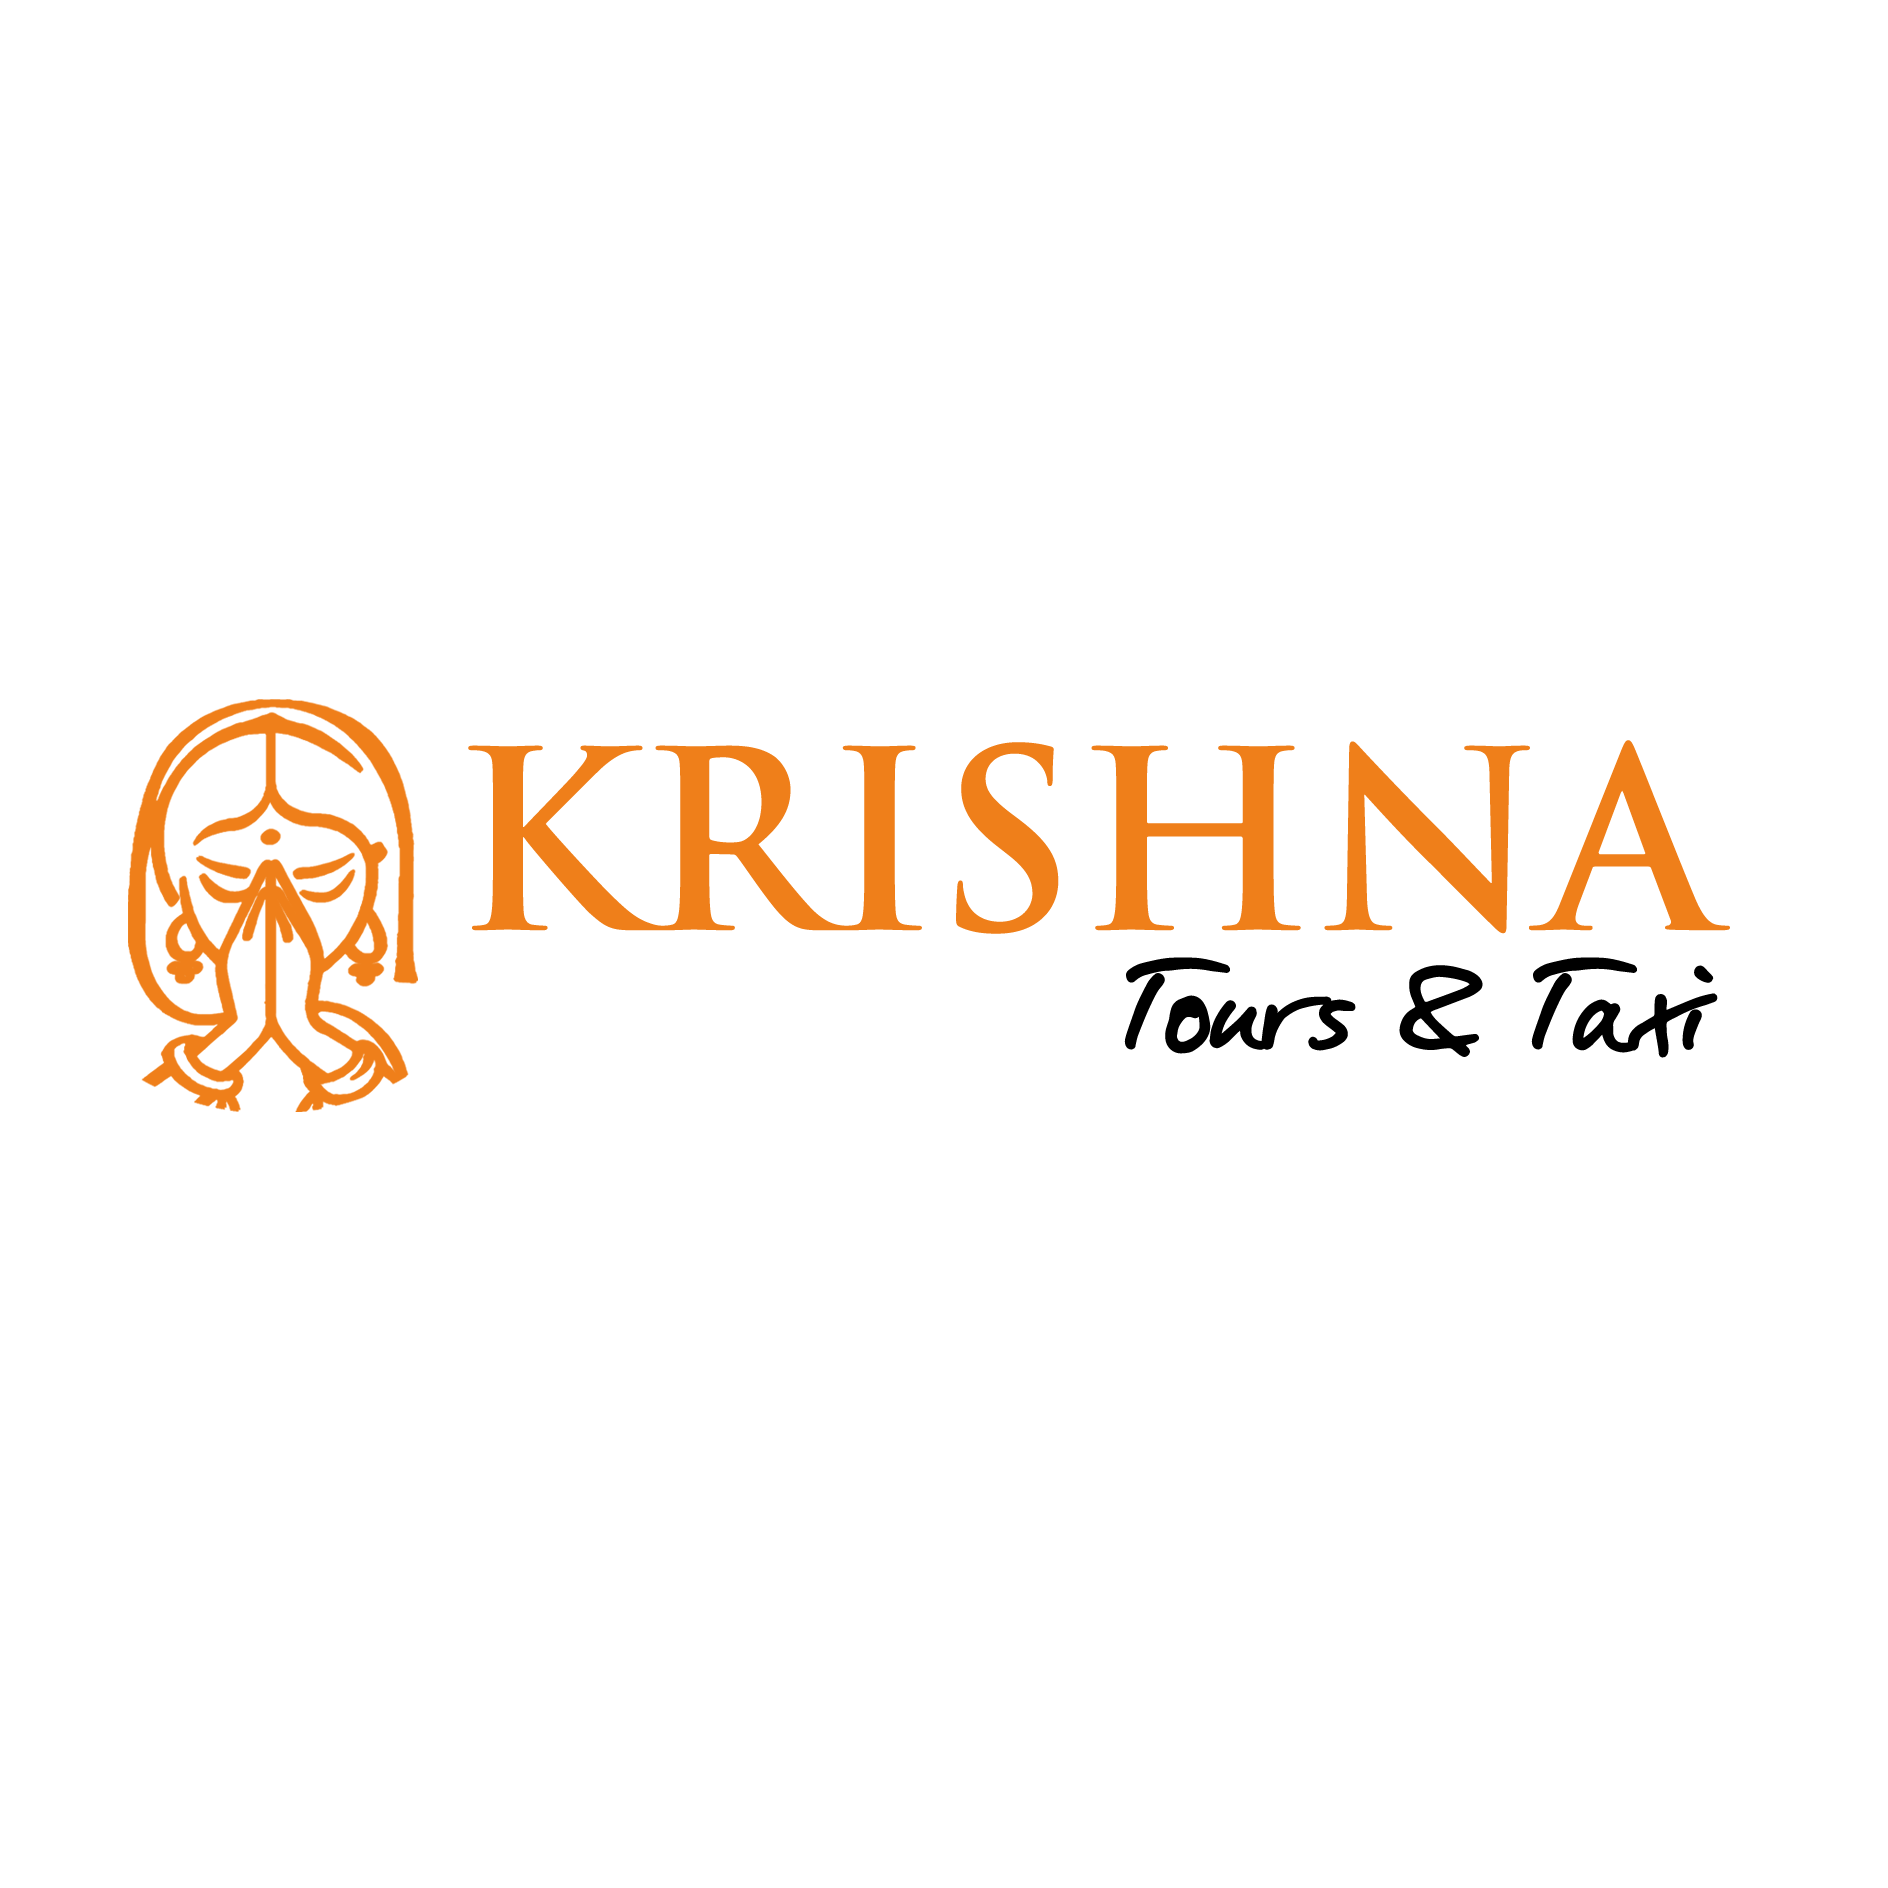 Krishna Tours and Taxi